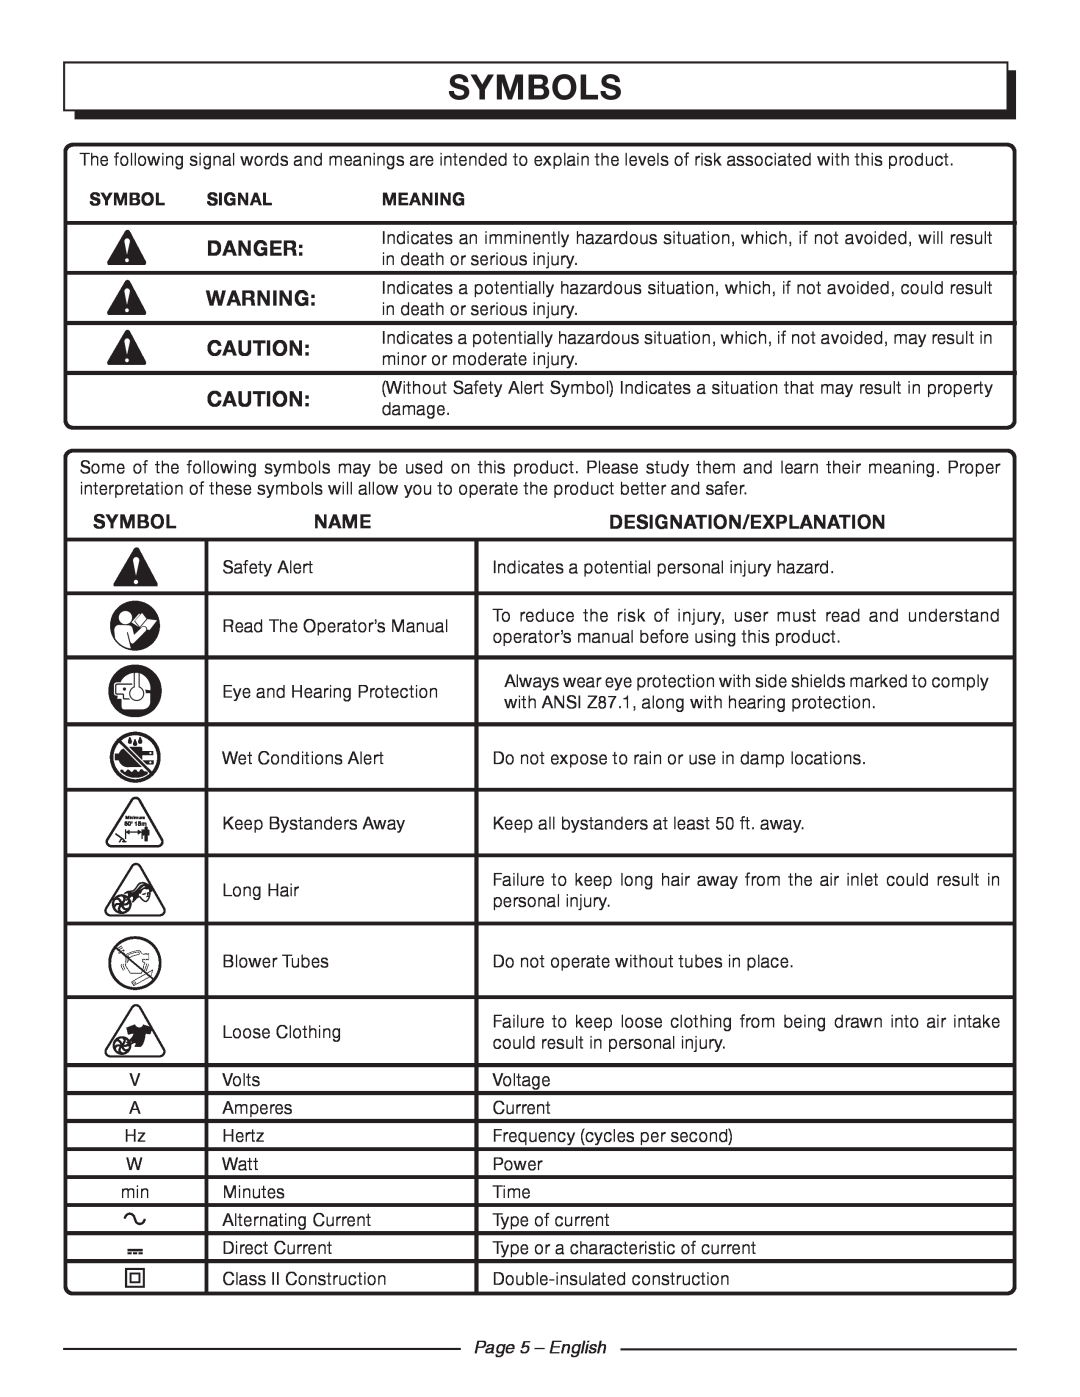 Homelite UT42100 manuel dutilisation Symbols, Danger, Name, Designation/Explanation, Signal, Meaning, Page 5 - English 